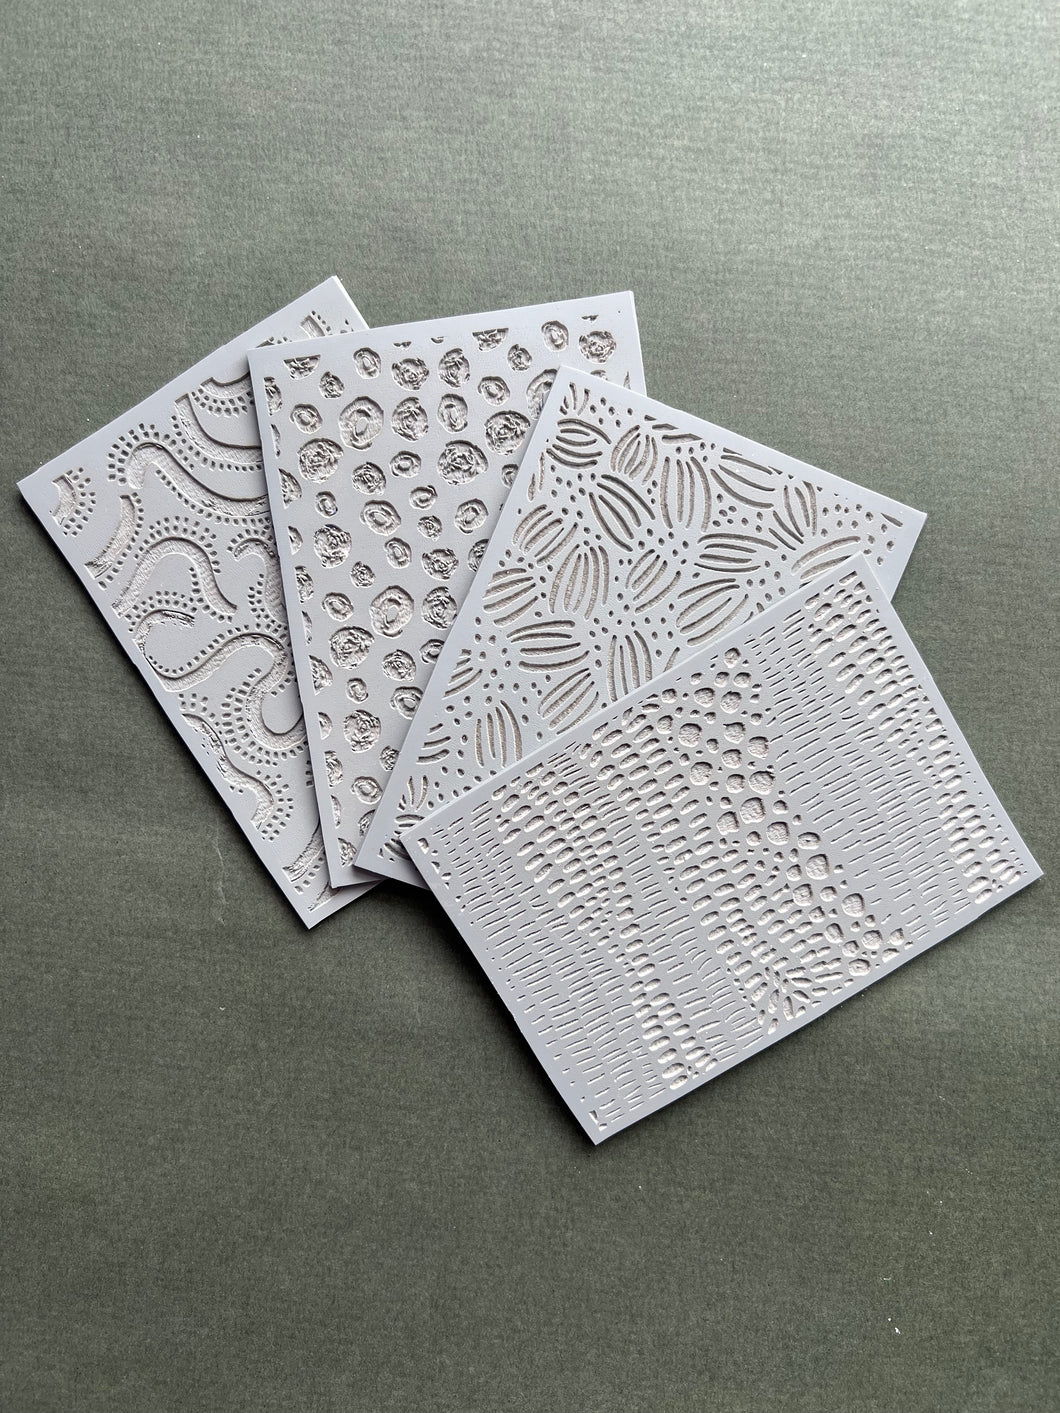 BUNDLE Abstract rubber texture mats